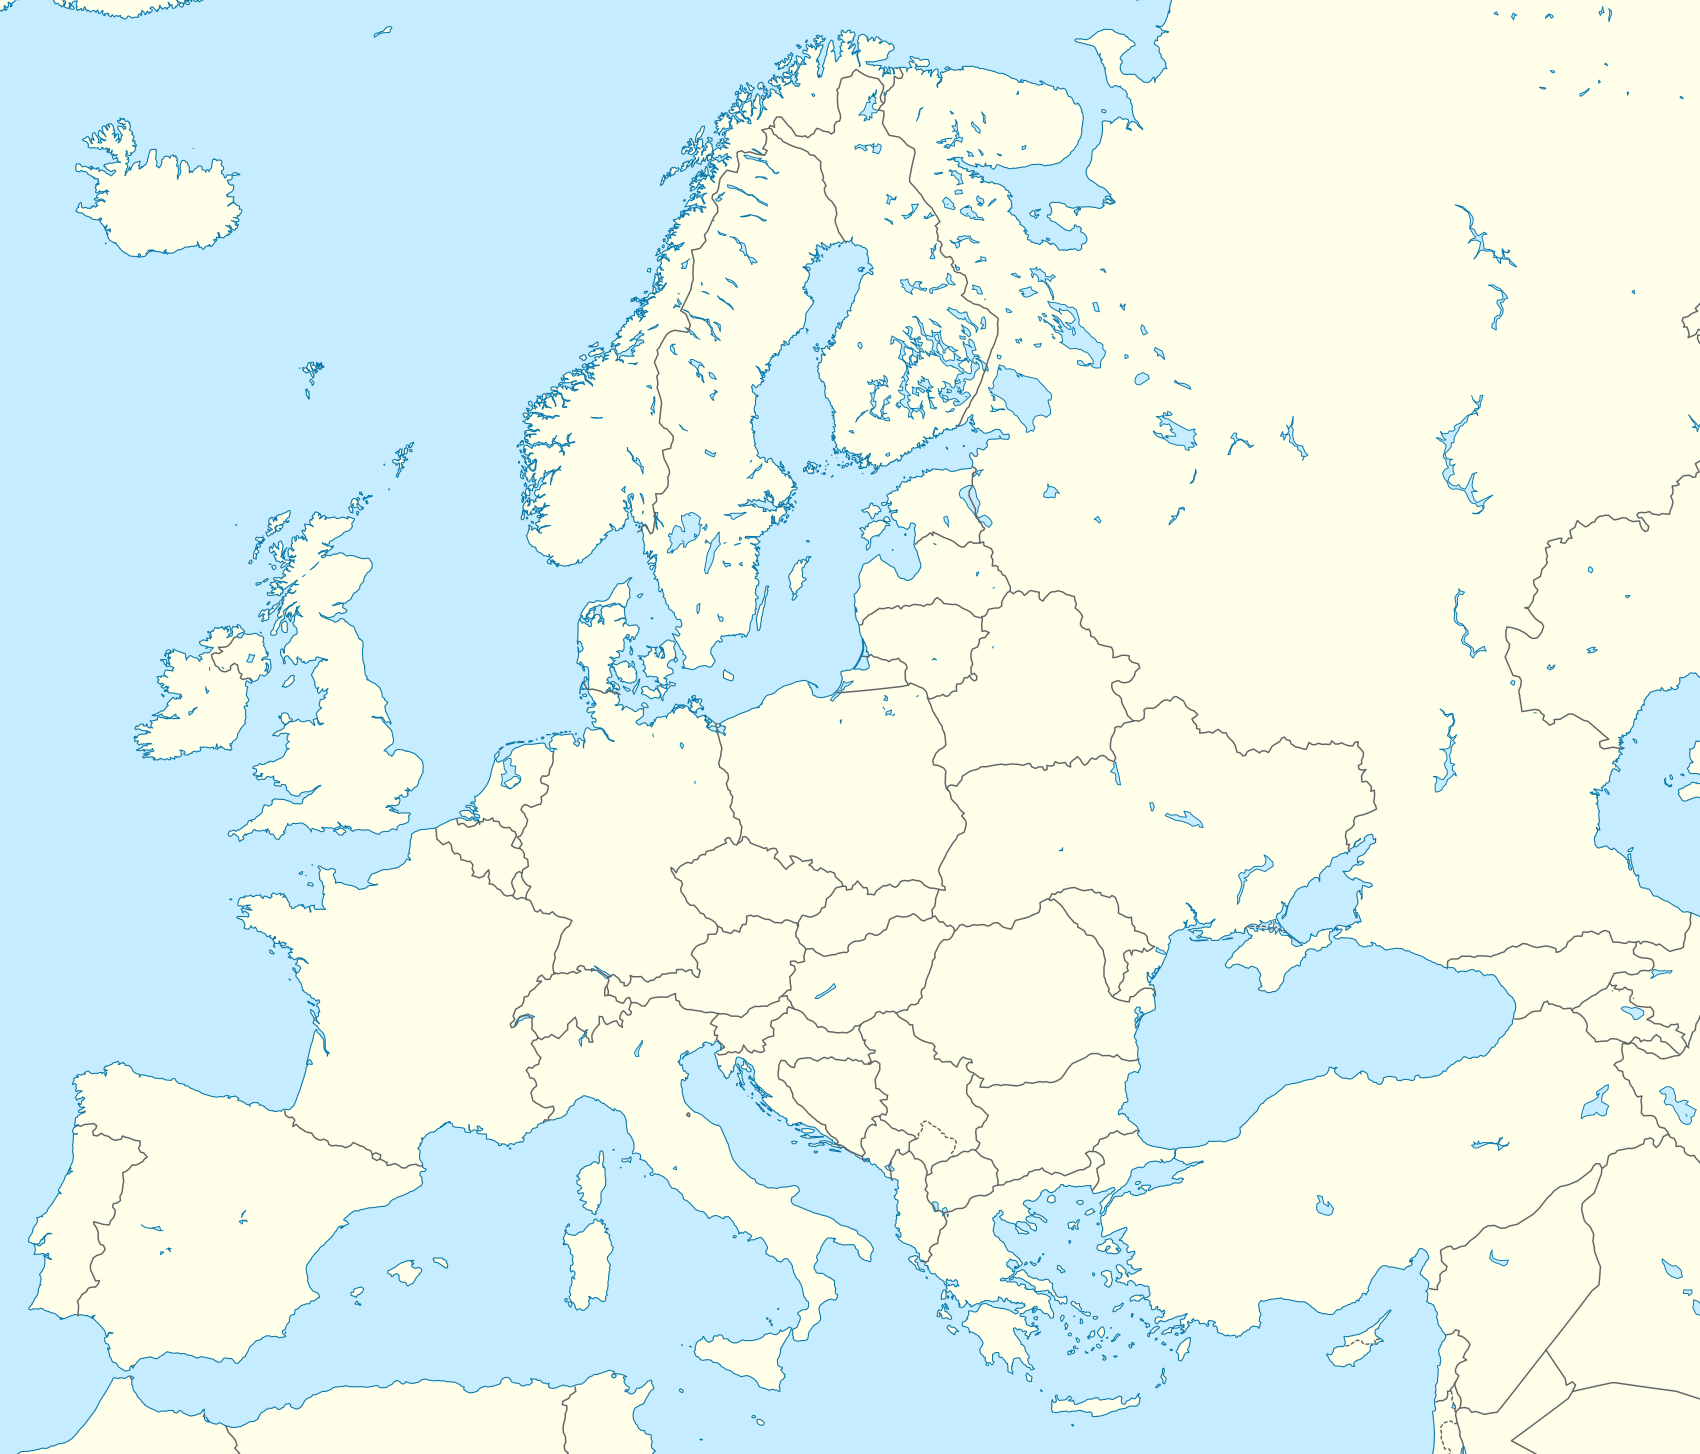 European Film Awards is located in Europe